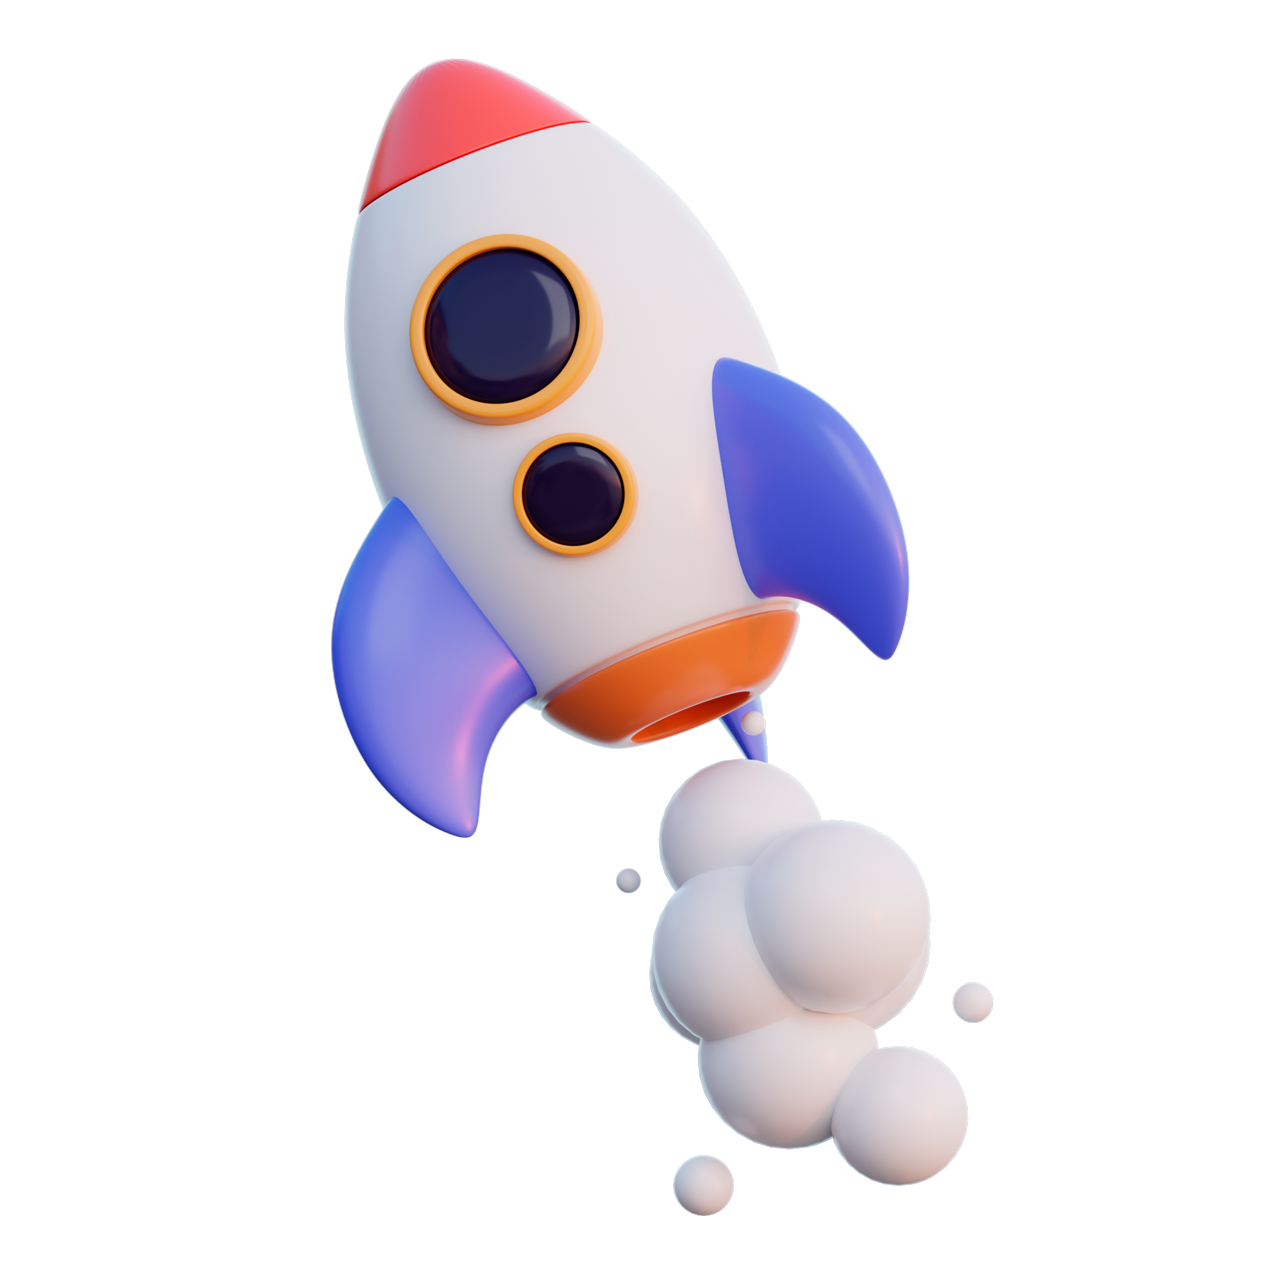 Rocket graphic